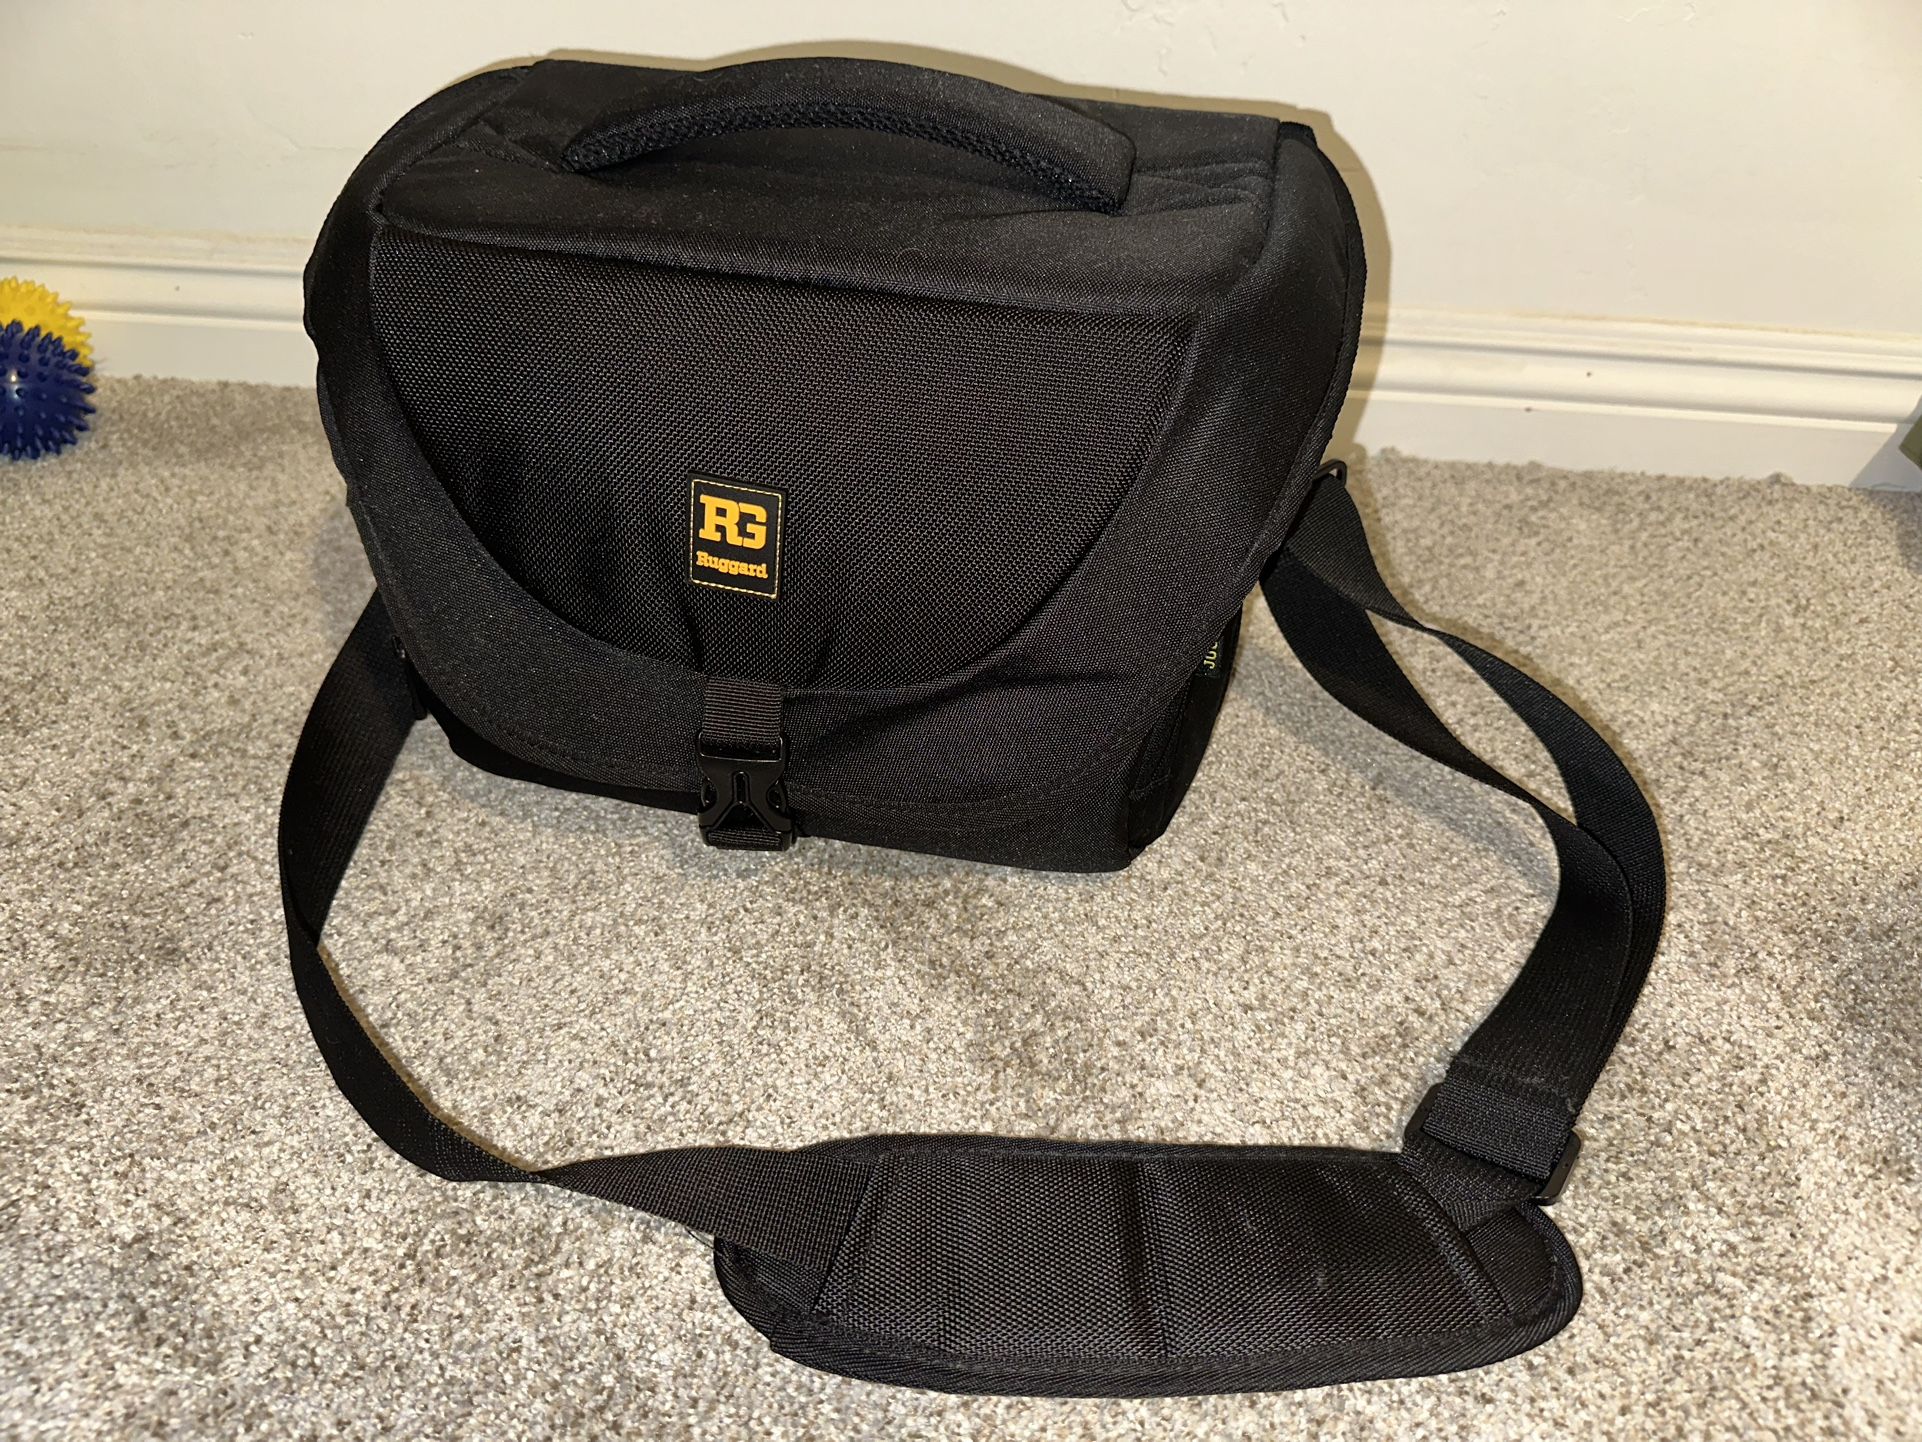 Ruggard DSLR Camera Bag